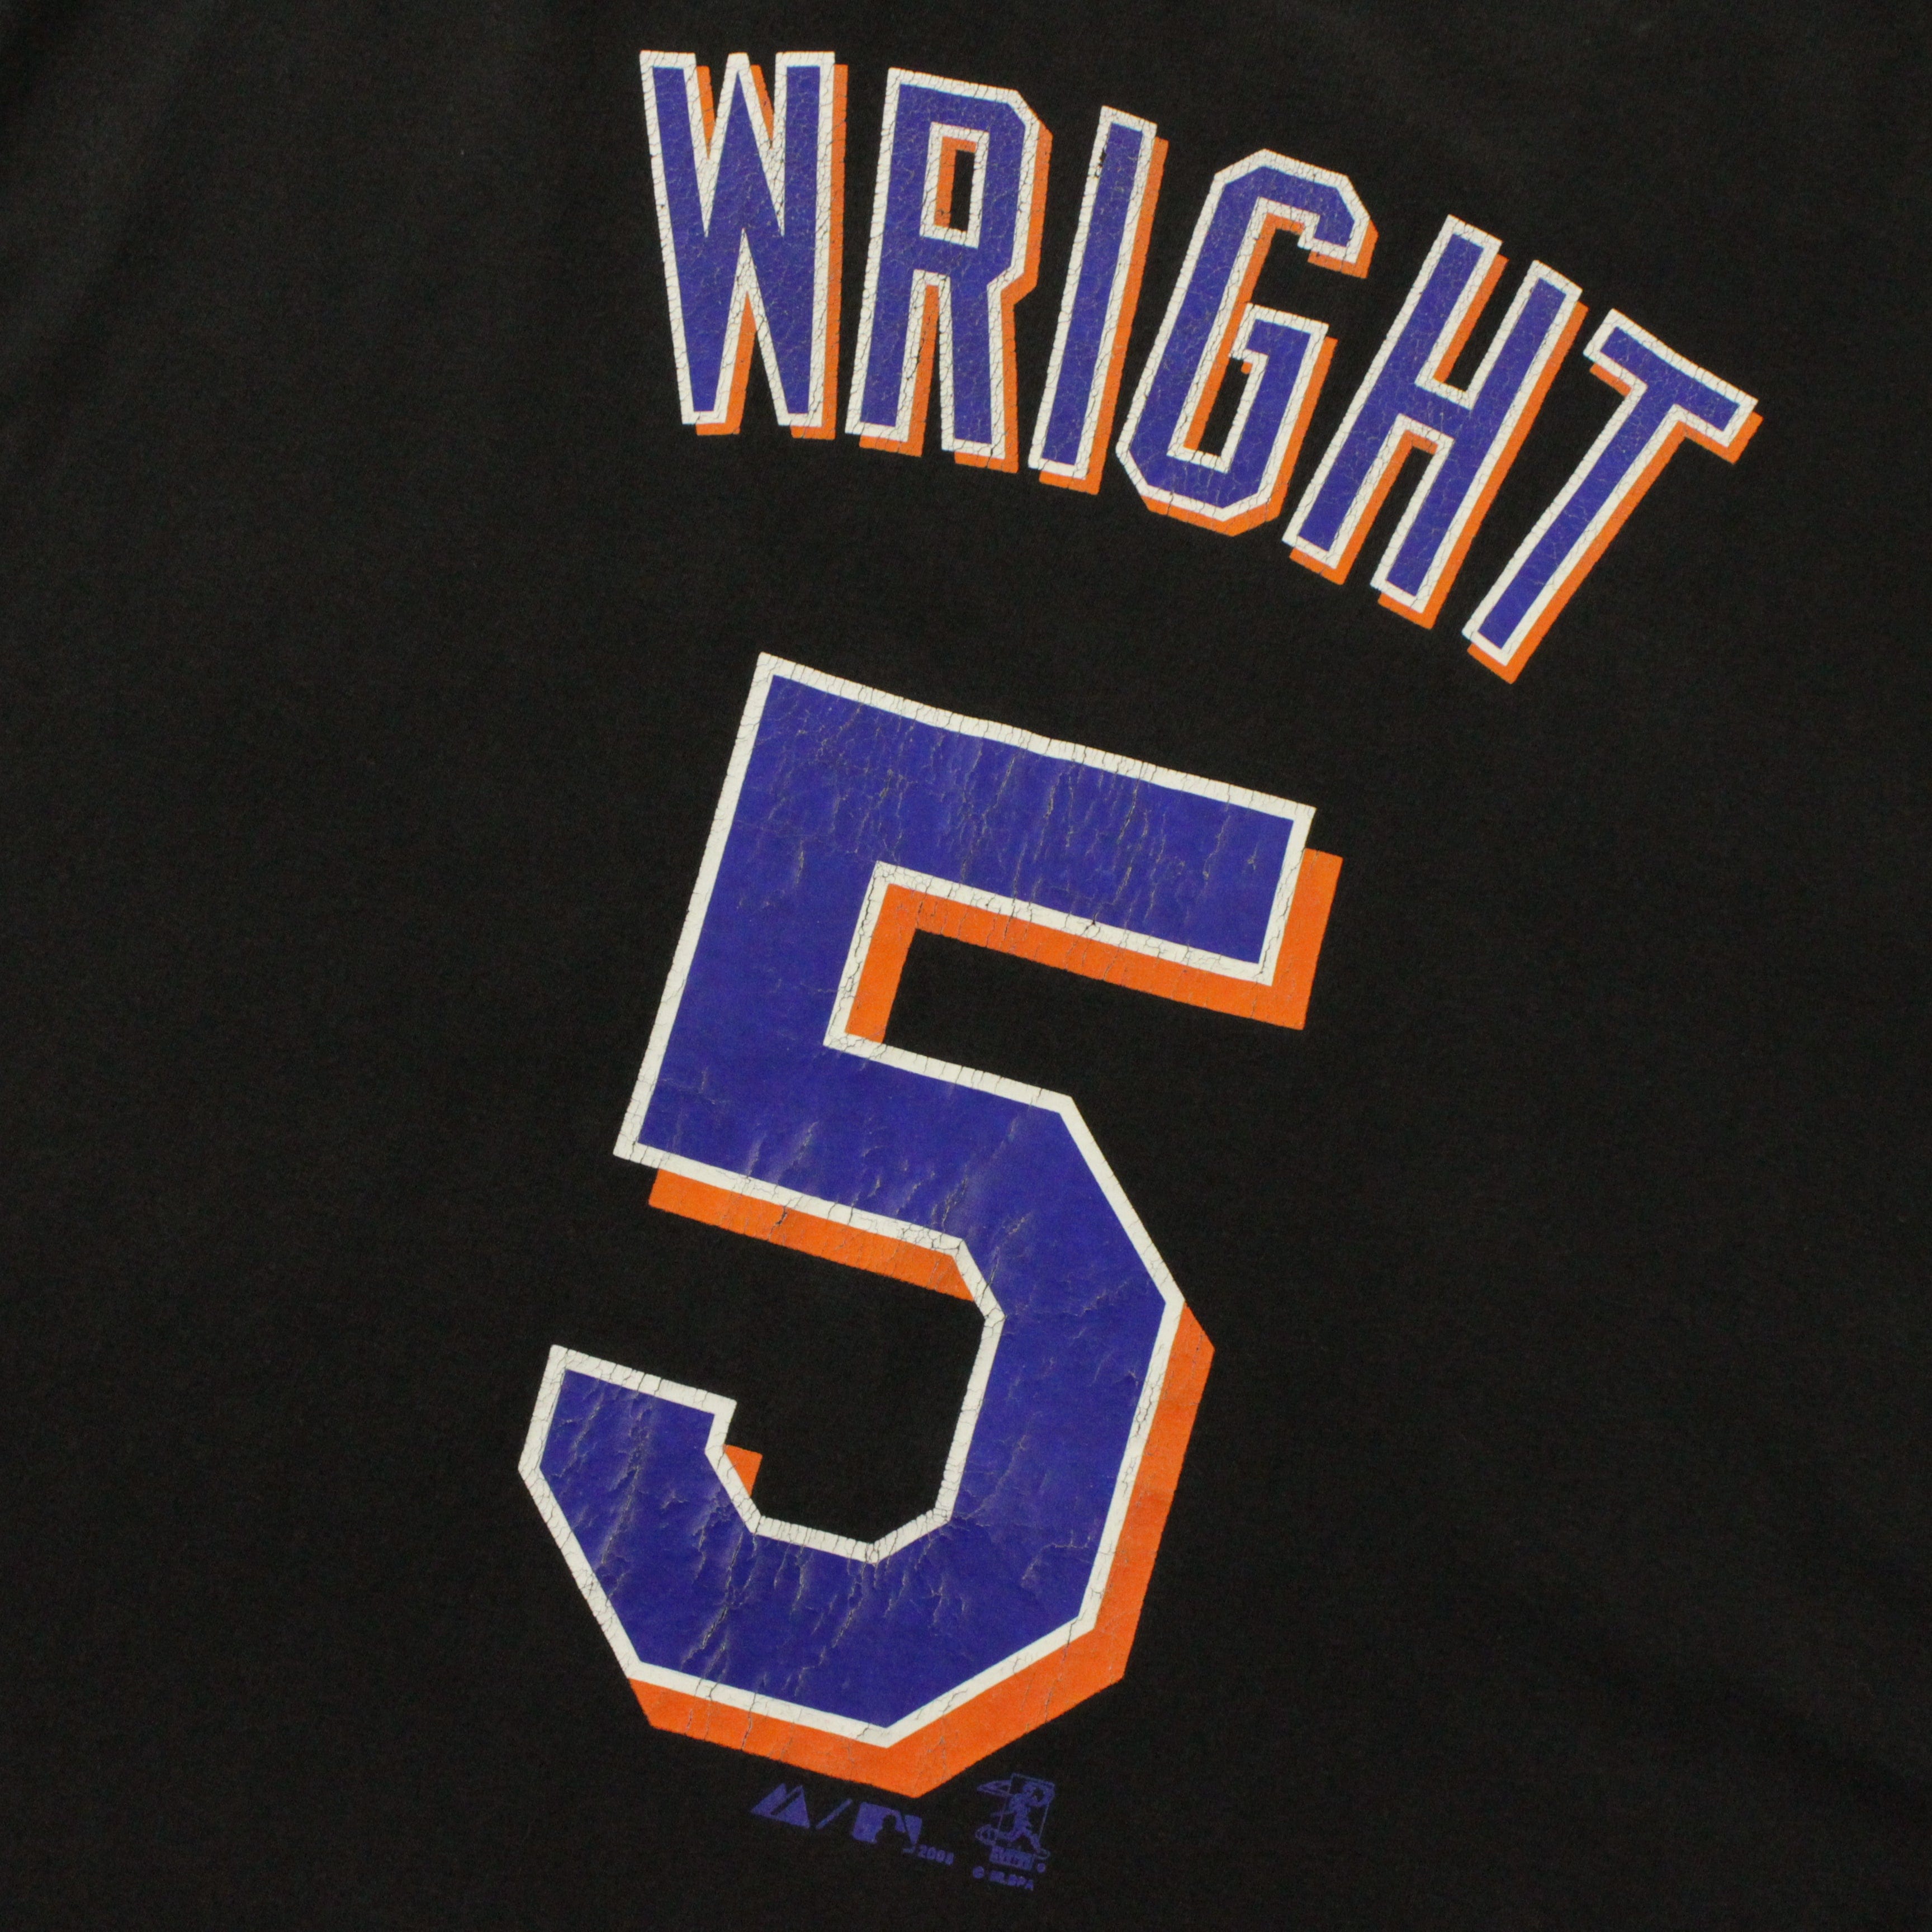 David Wright Black MLB Jerseys for sale